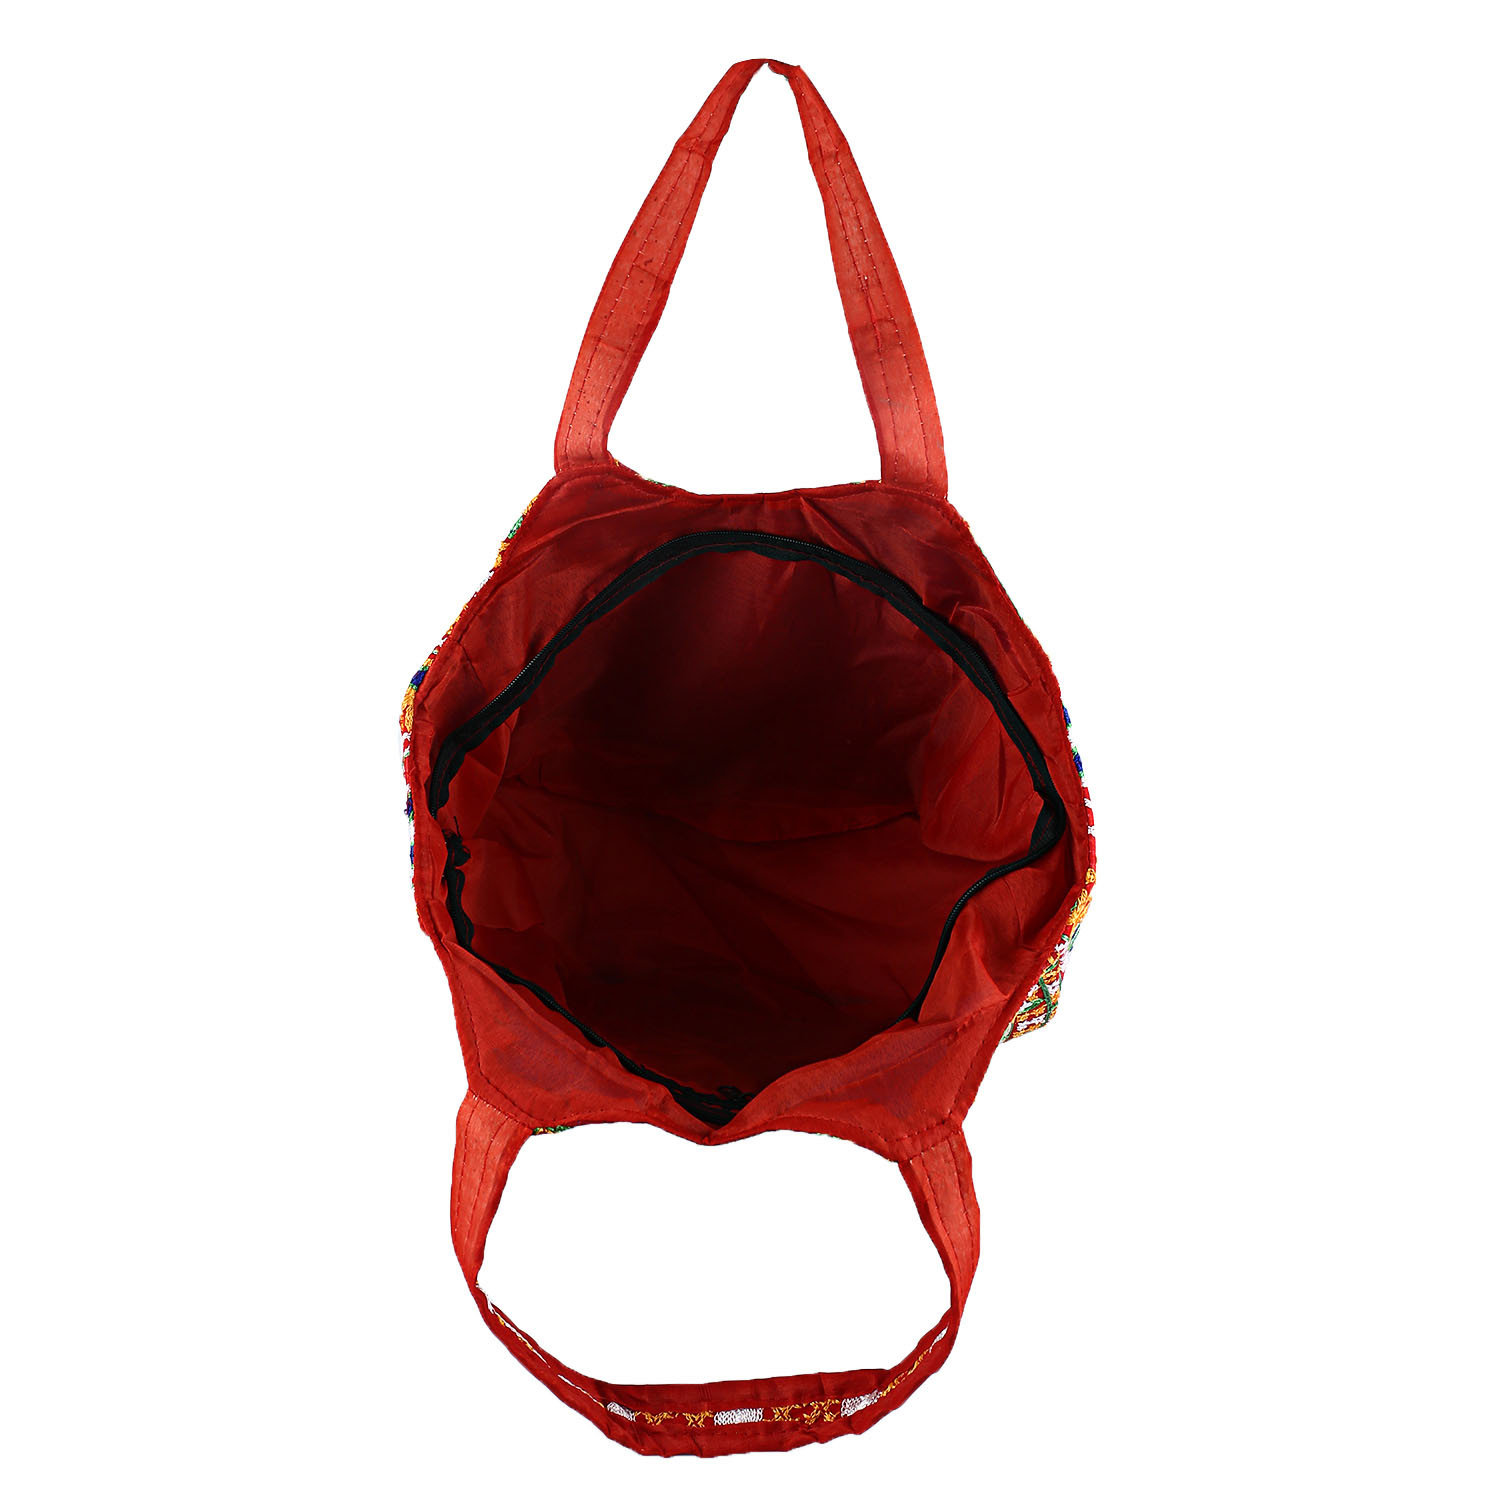 Kuber Industries Multiuses Velvet Floral Design Hand Bag/Tote Bag For Daily Trips, Travel, Office (Red)